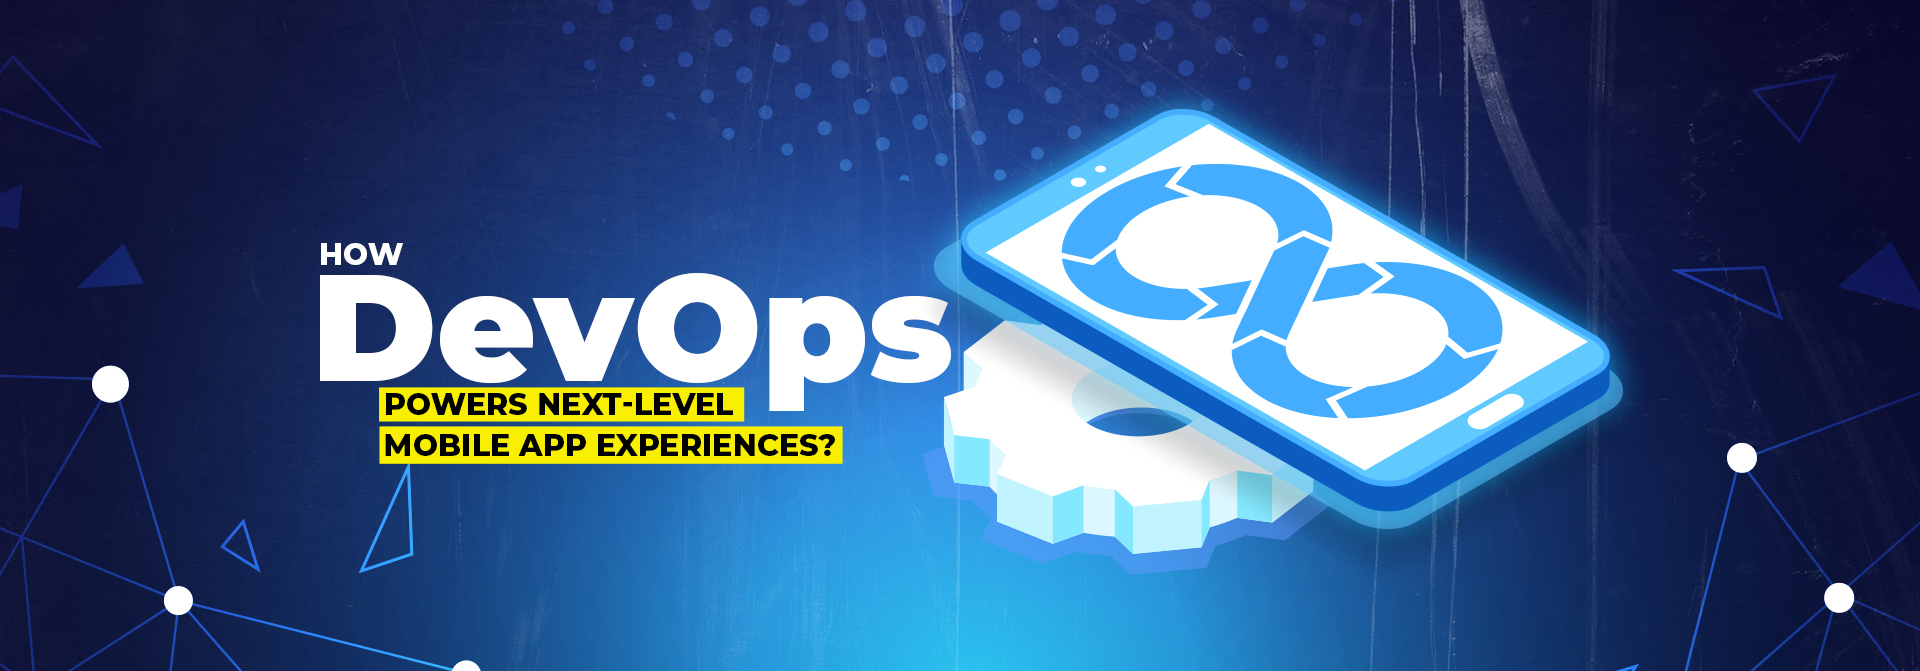 PAC-blog_How-DevOps-Powers-Next-Level-Mobile-App-Experiences_main-banner